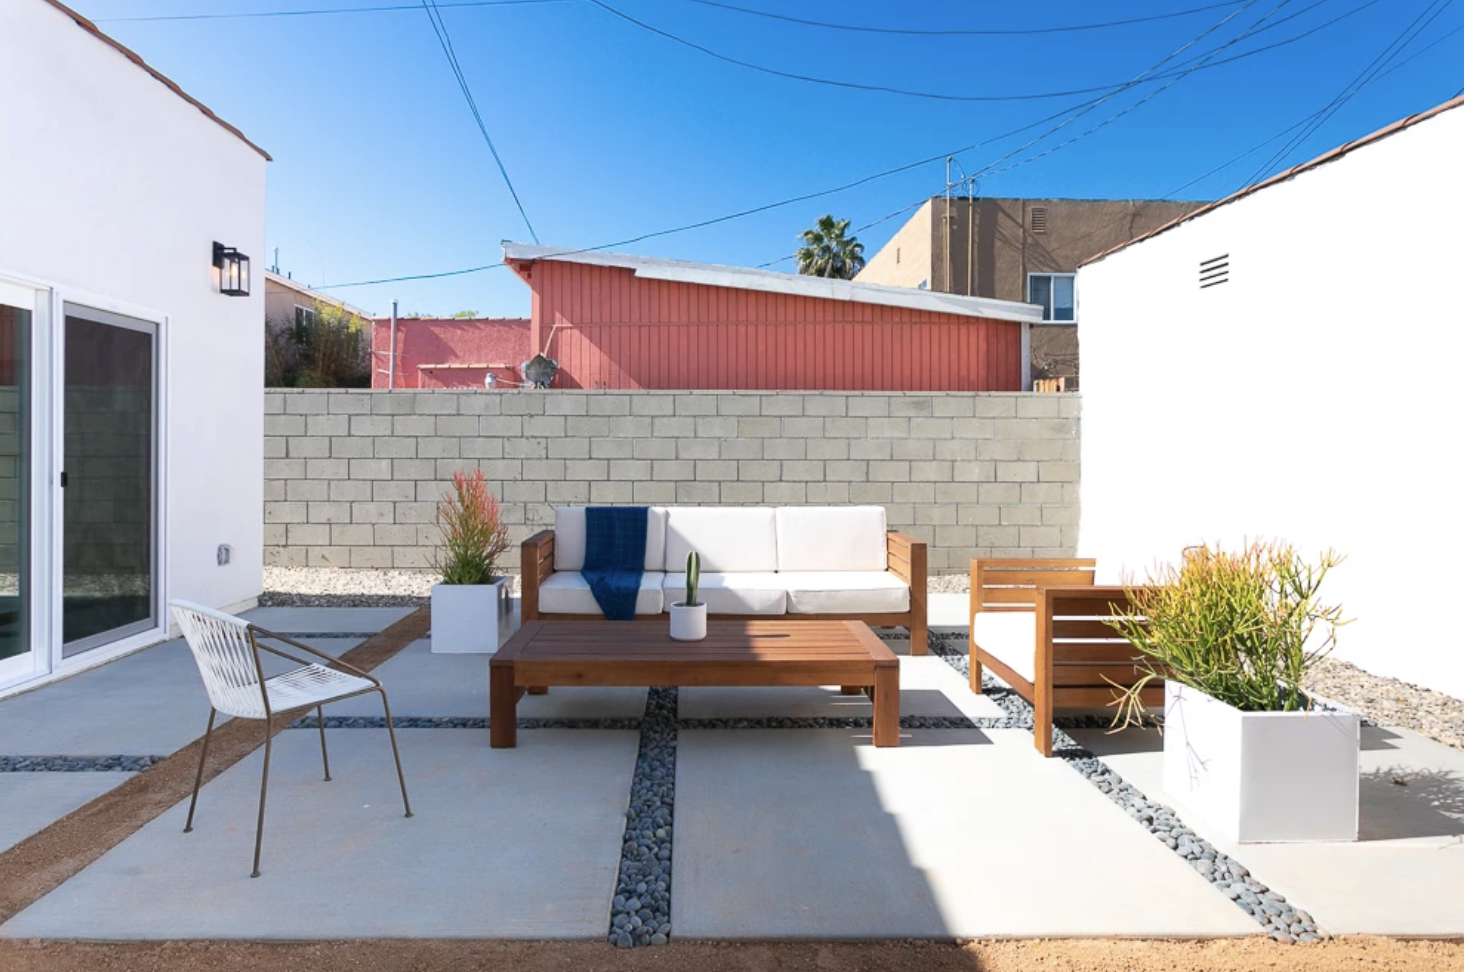 modern style patio setup in backyard